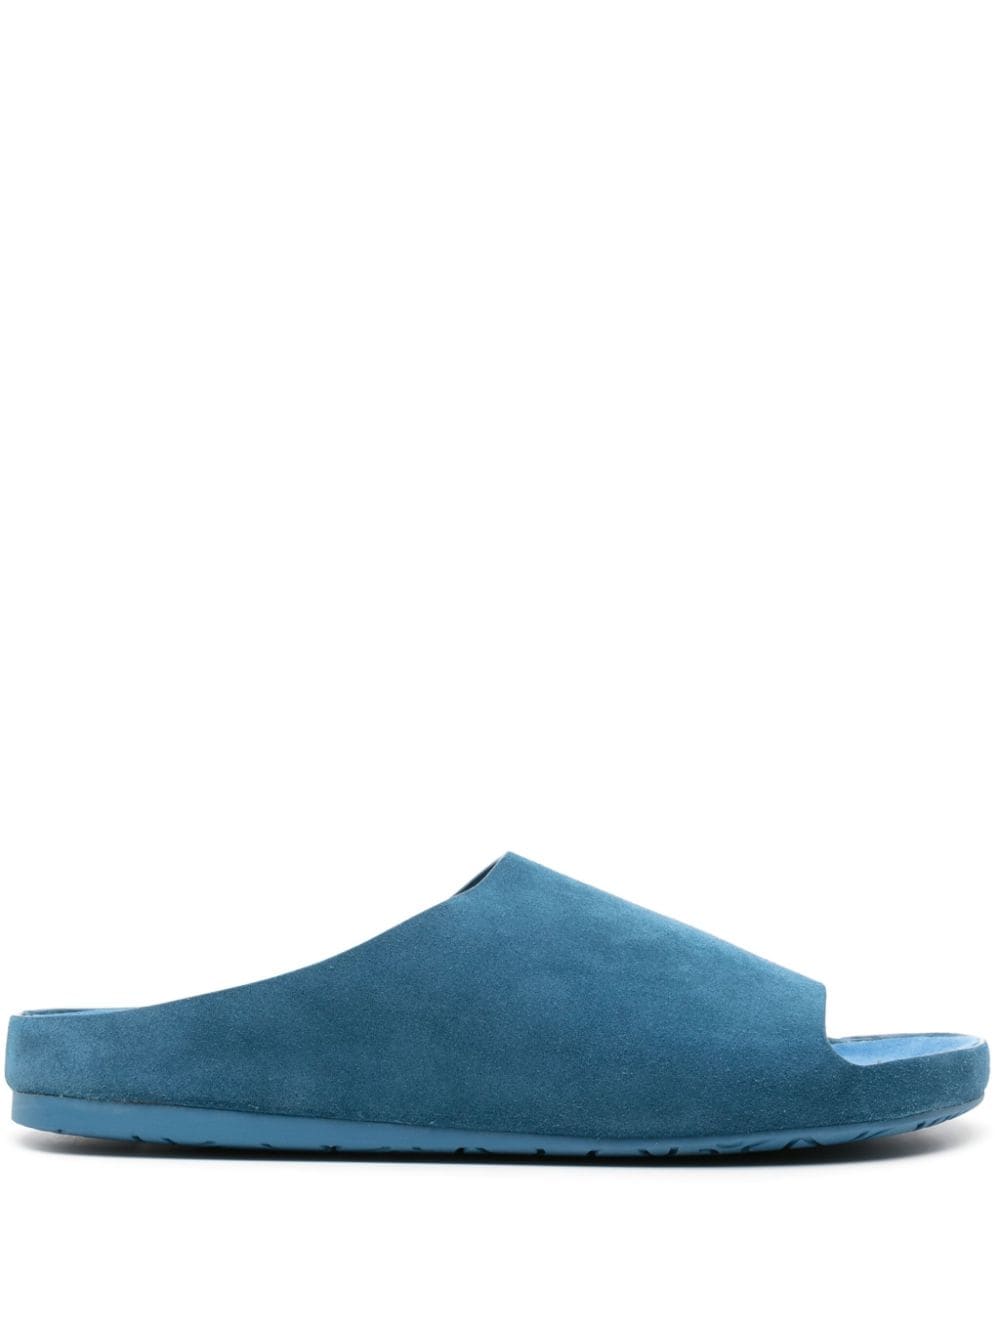 LOEWE Lago suede sandals - Blue von LOEWE